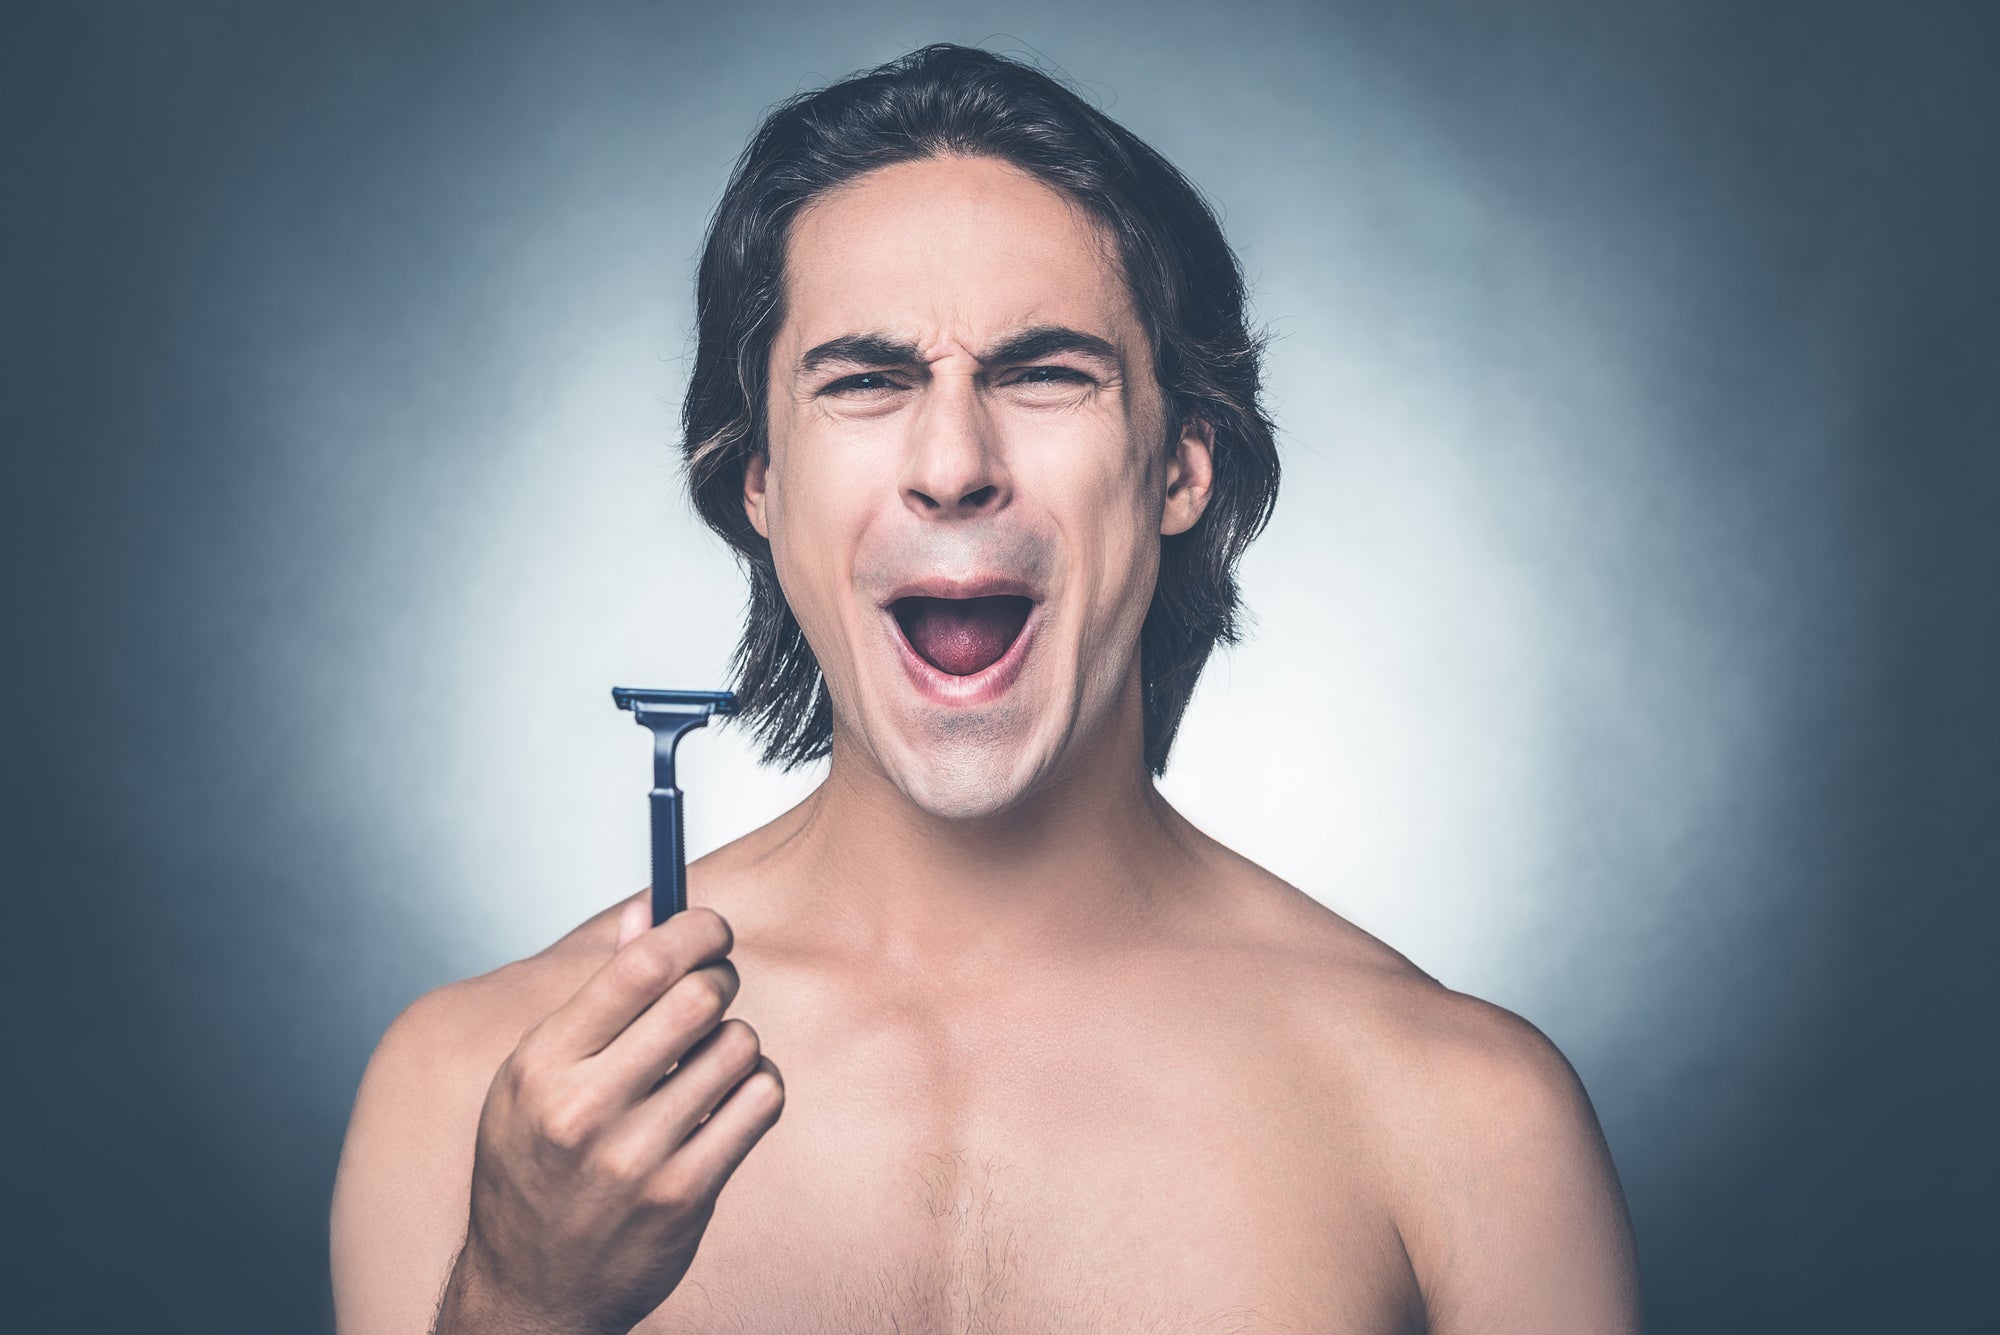 Guide To Finding The Best Men's Razor For Sensitive Skin